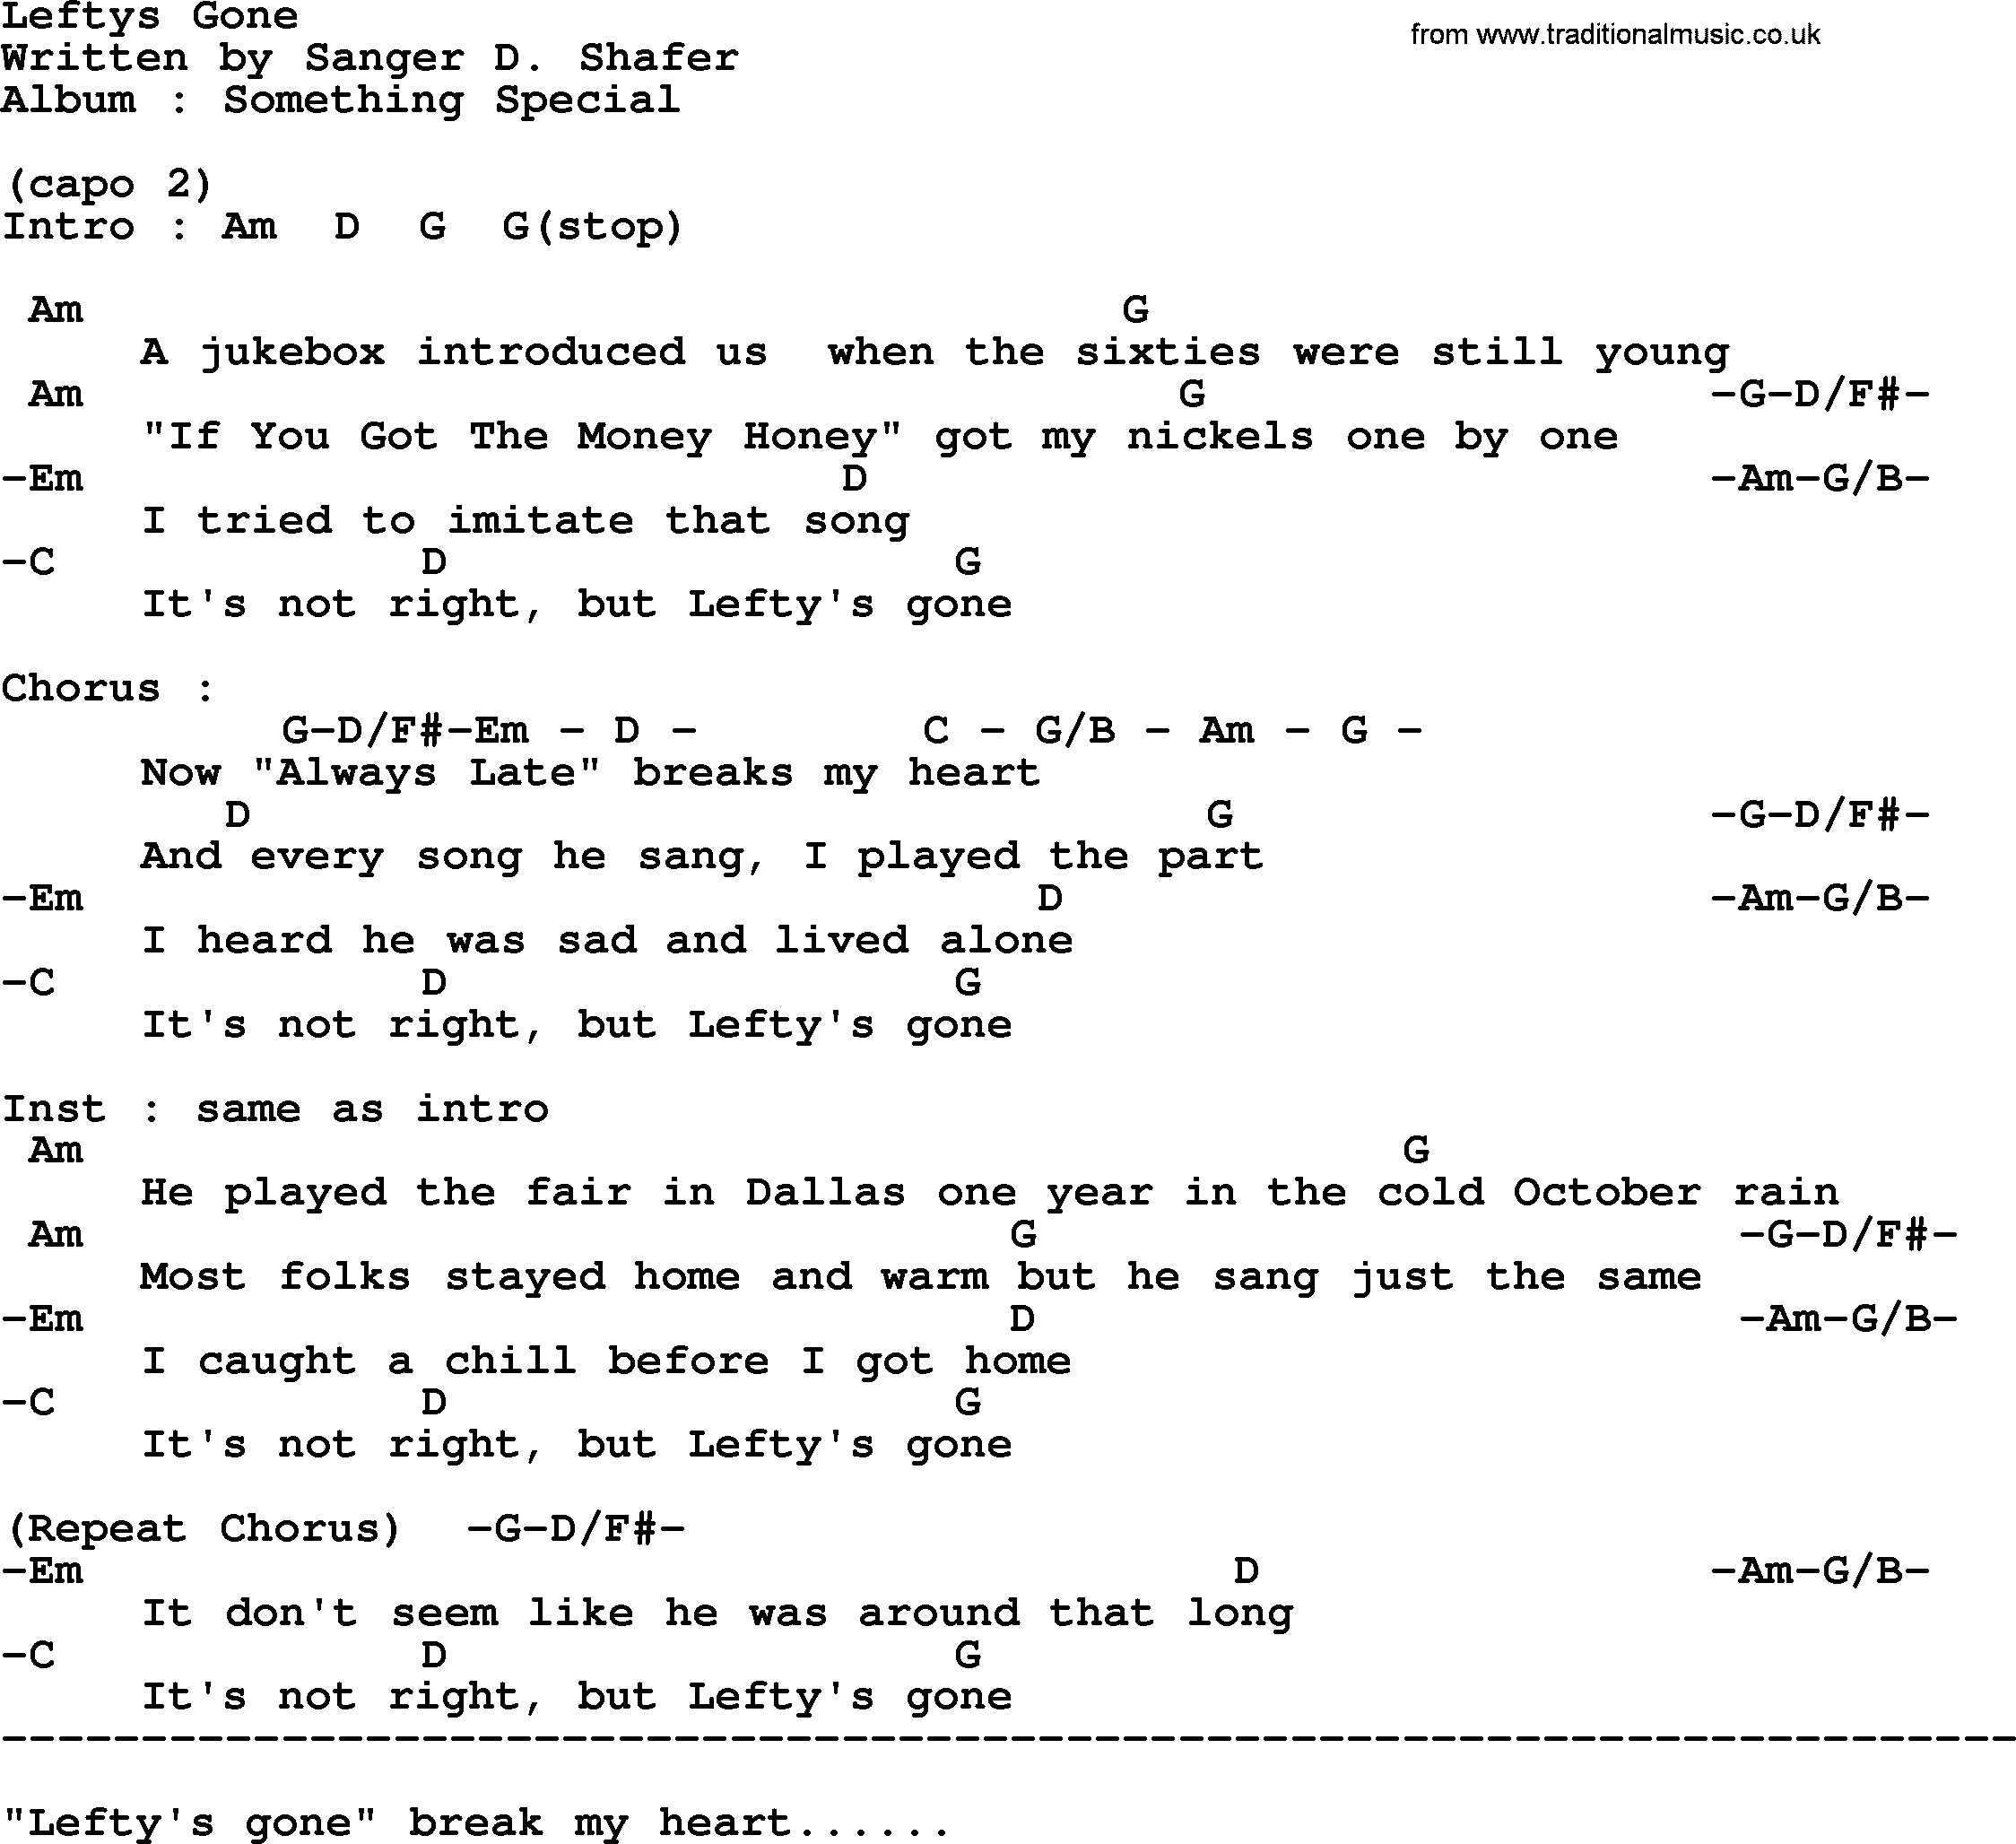 George Strait song: Leftys Gone, lyrics and chords